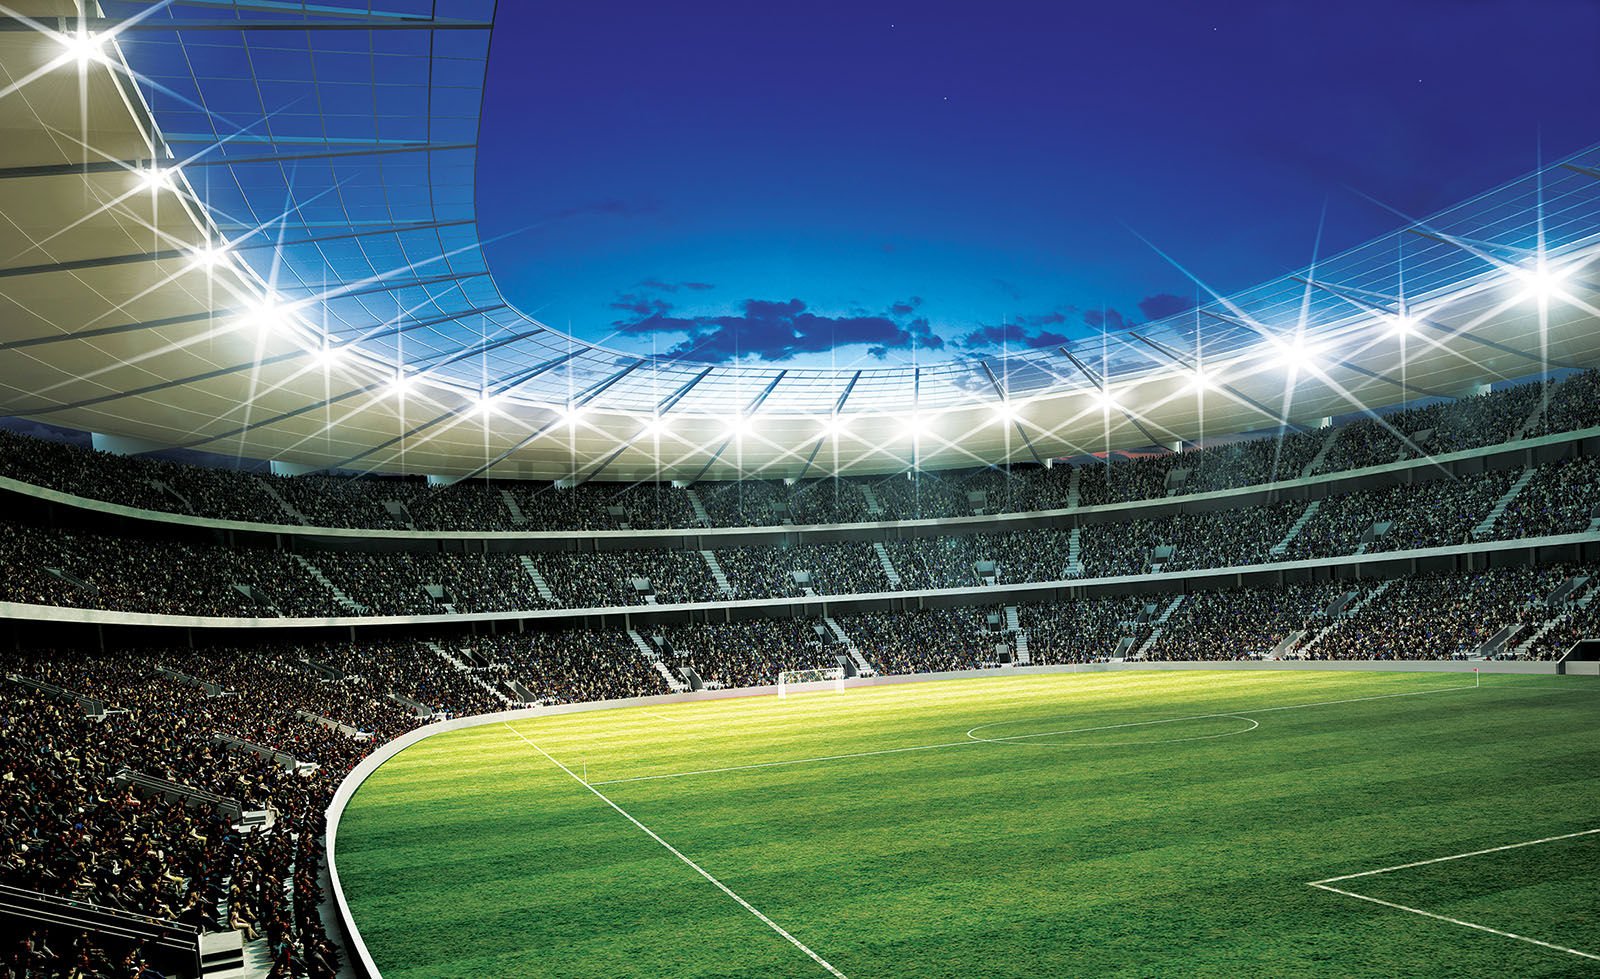 Fototapet vlies: Stadion de Fotbal(1) - 208x146 cm